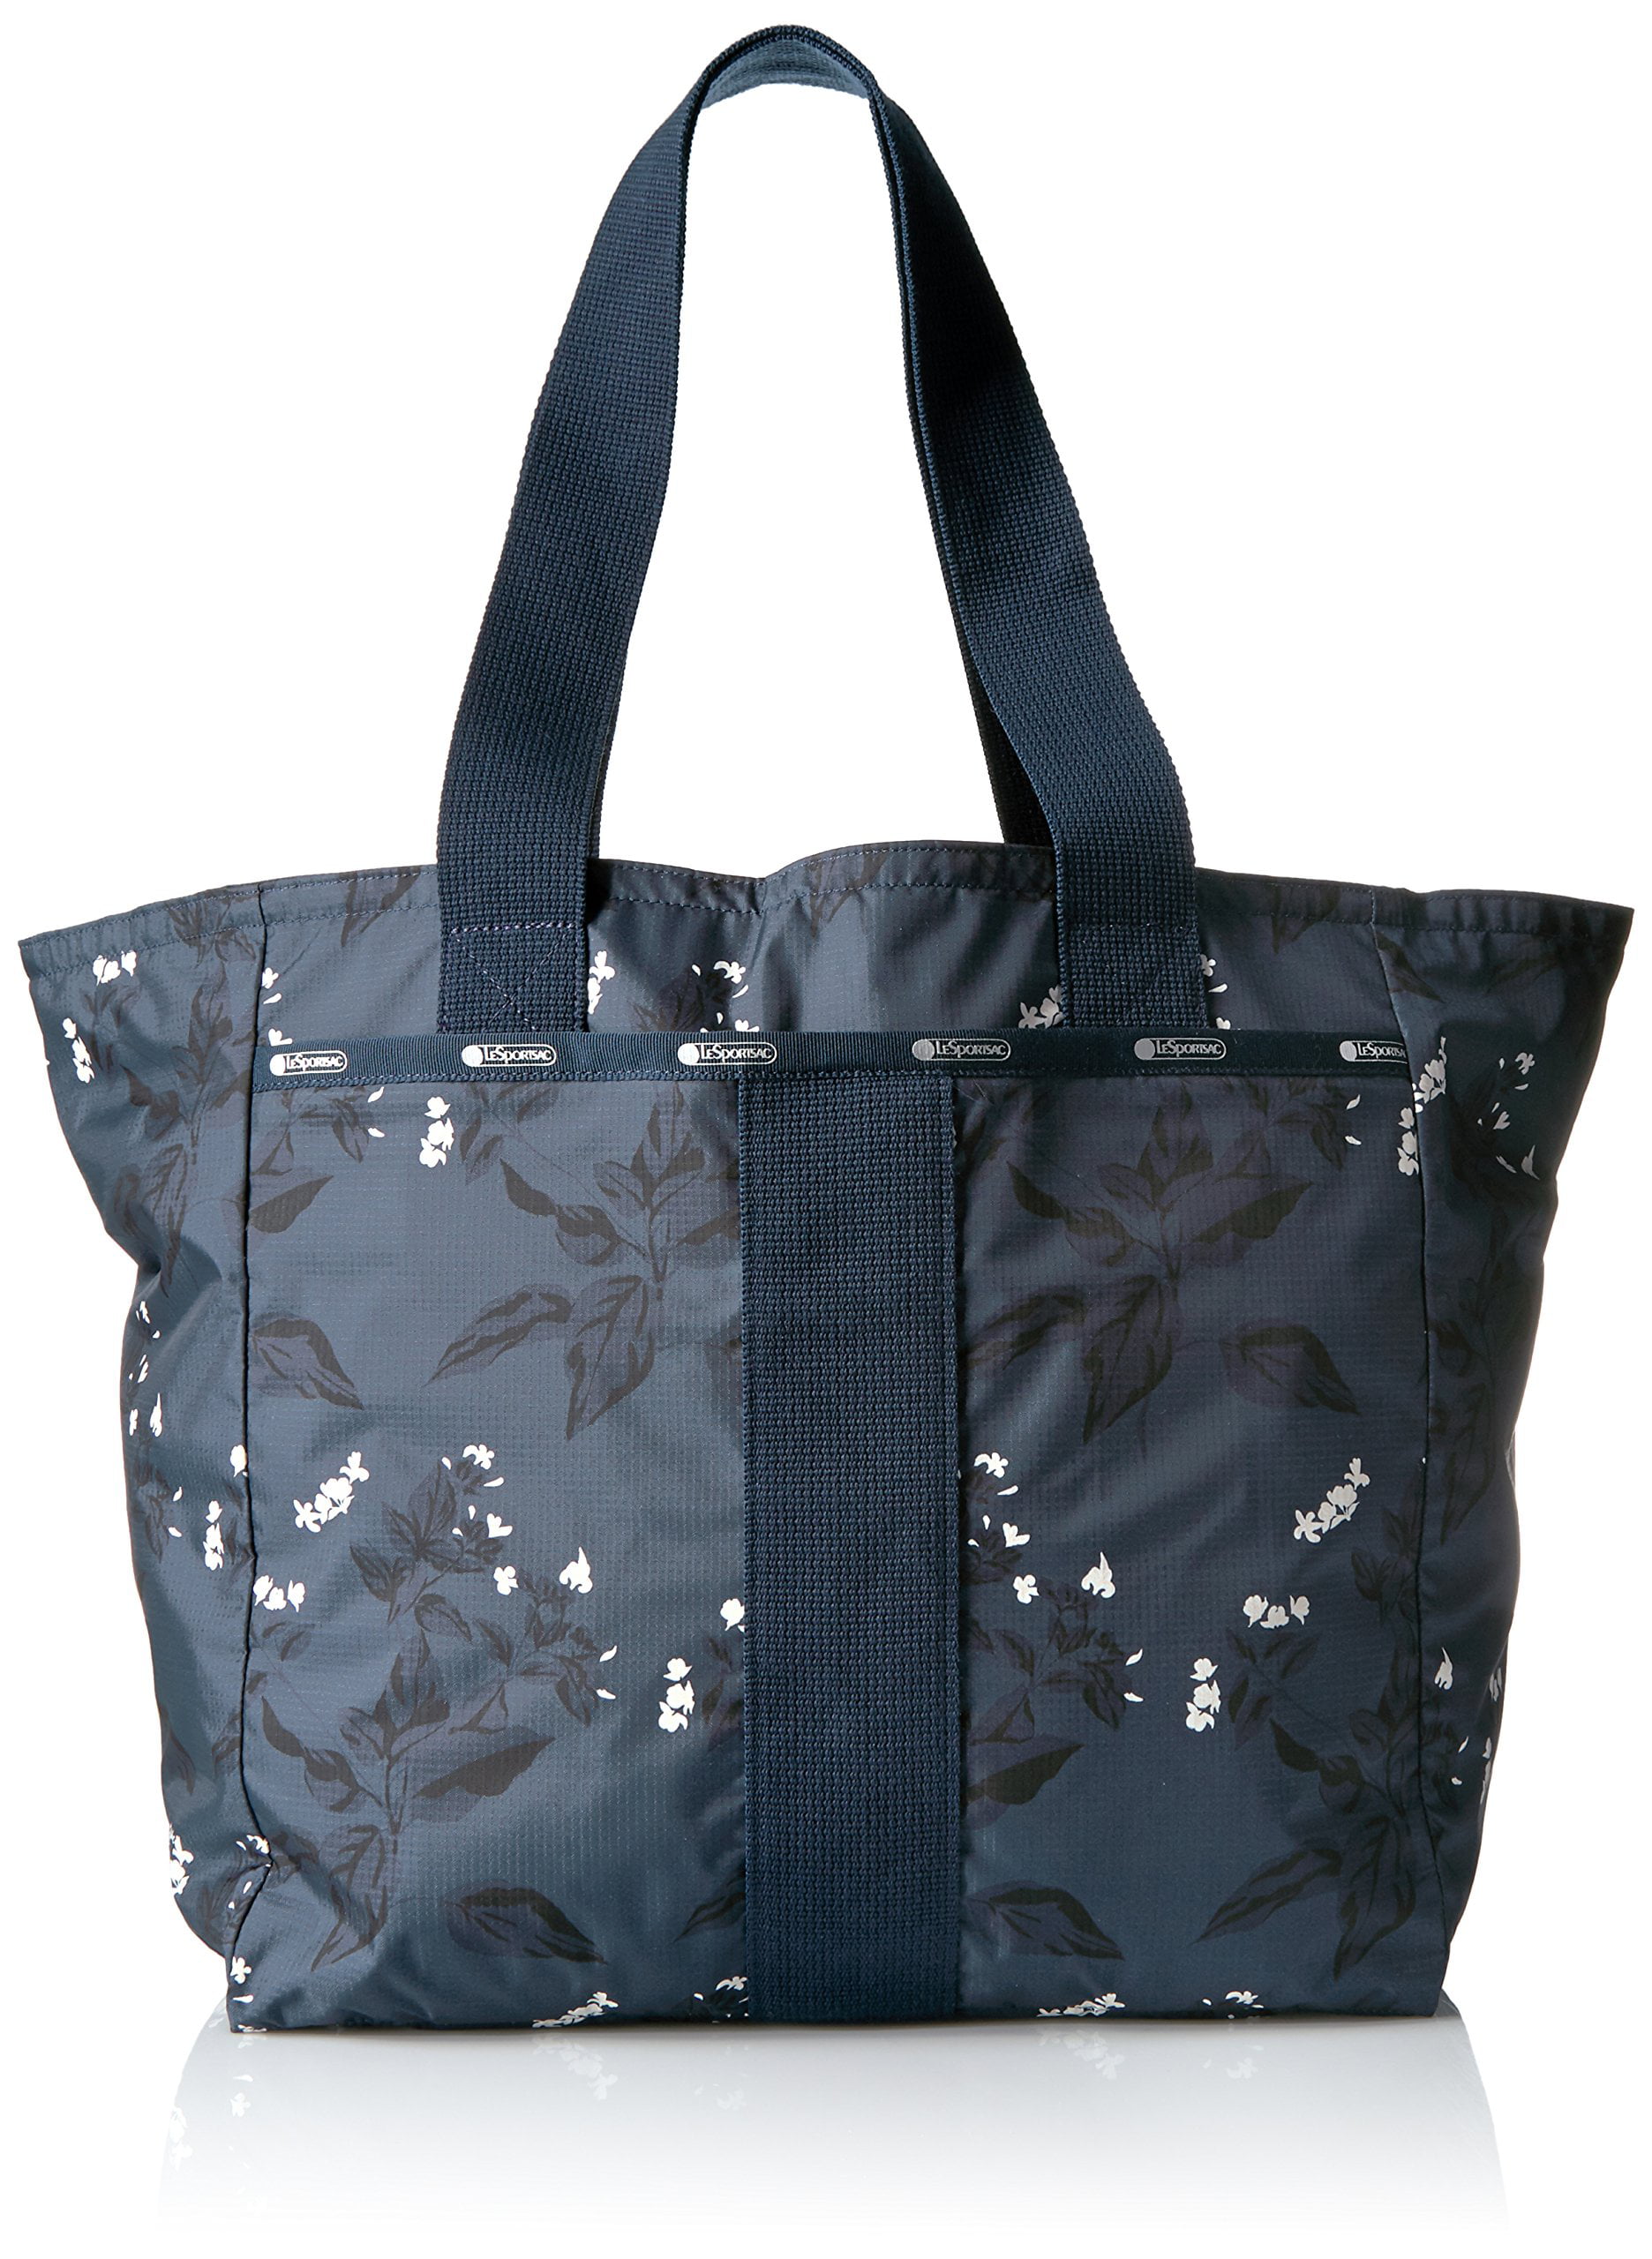 LeSportsac Everyday Zip Tote Bag in Black